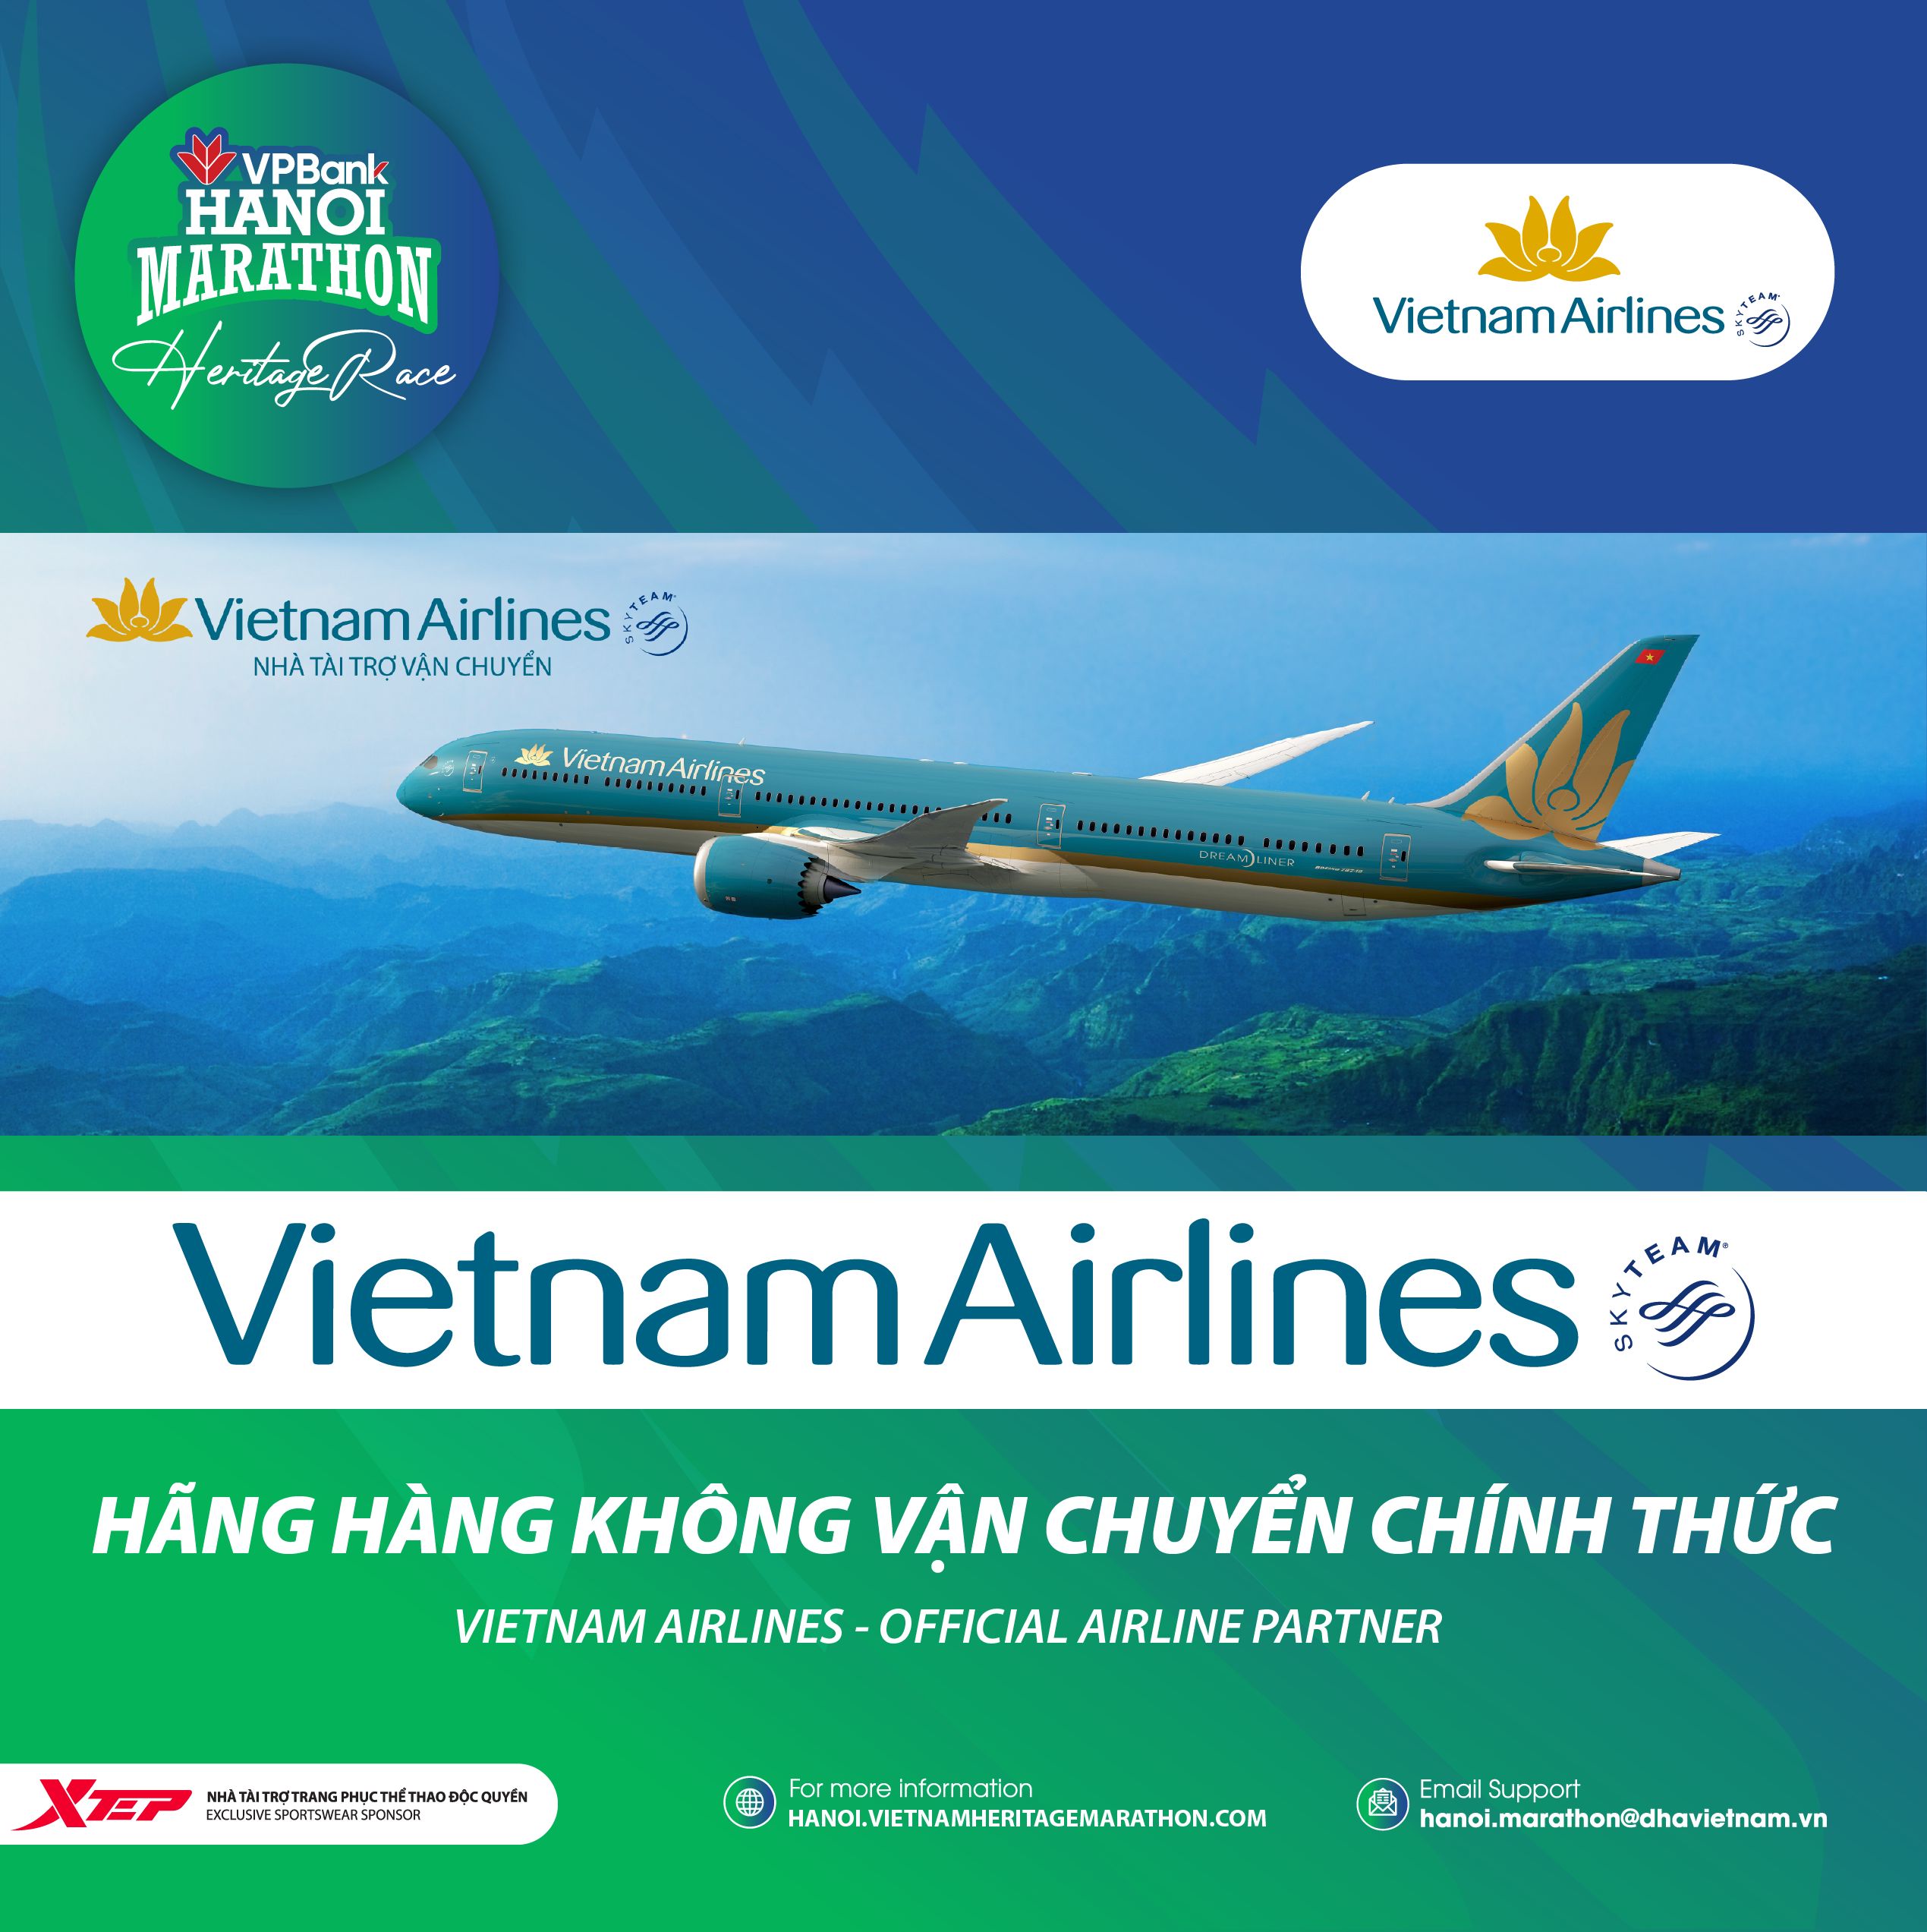 Vietnam Airlines - VPBank Hanoi Marathon 2021's Official Partner